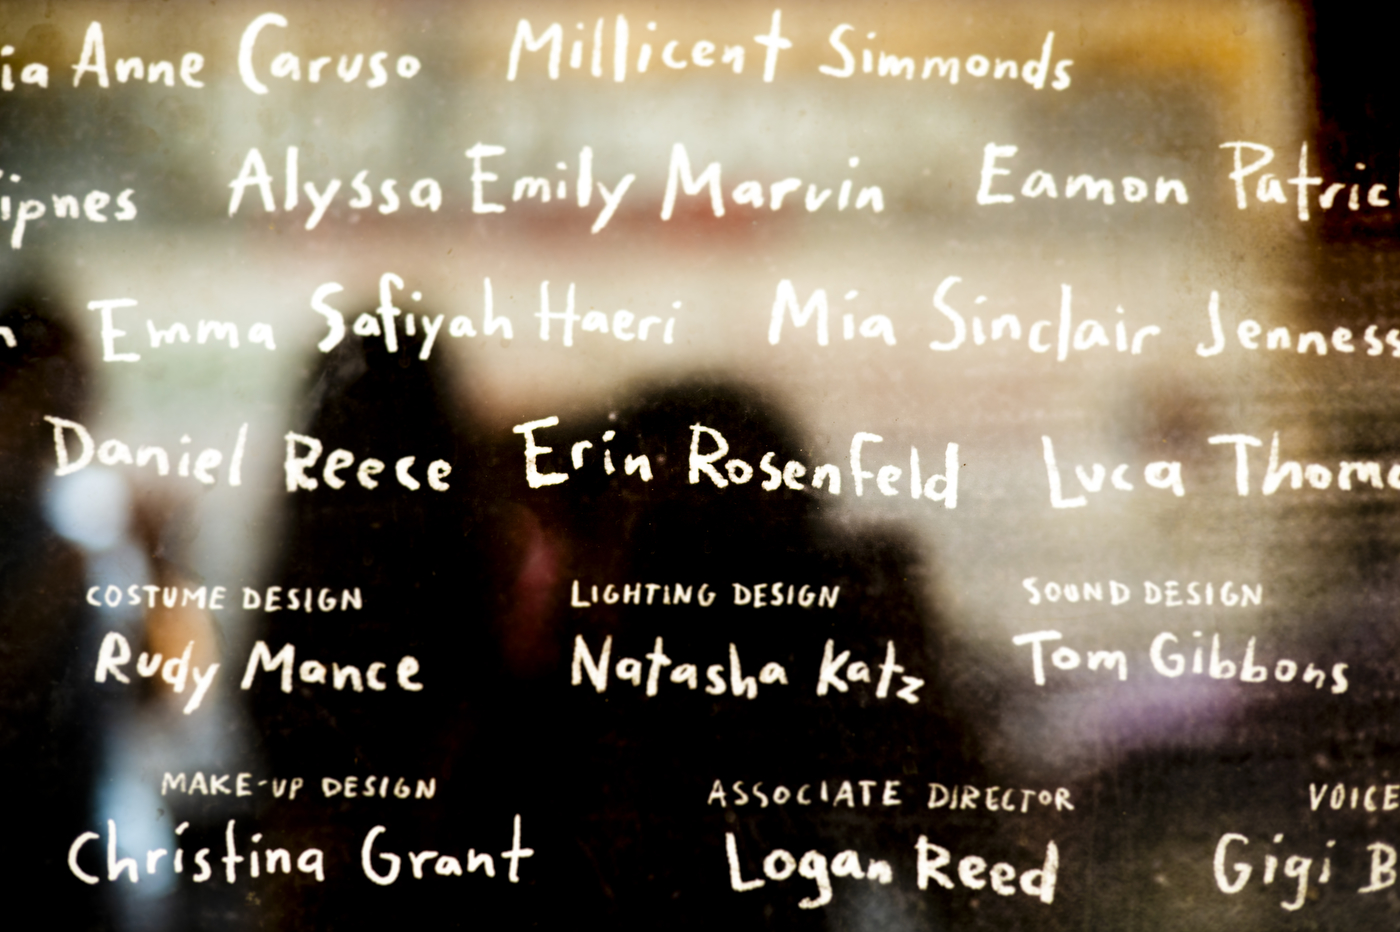 cast listing on playbill